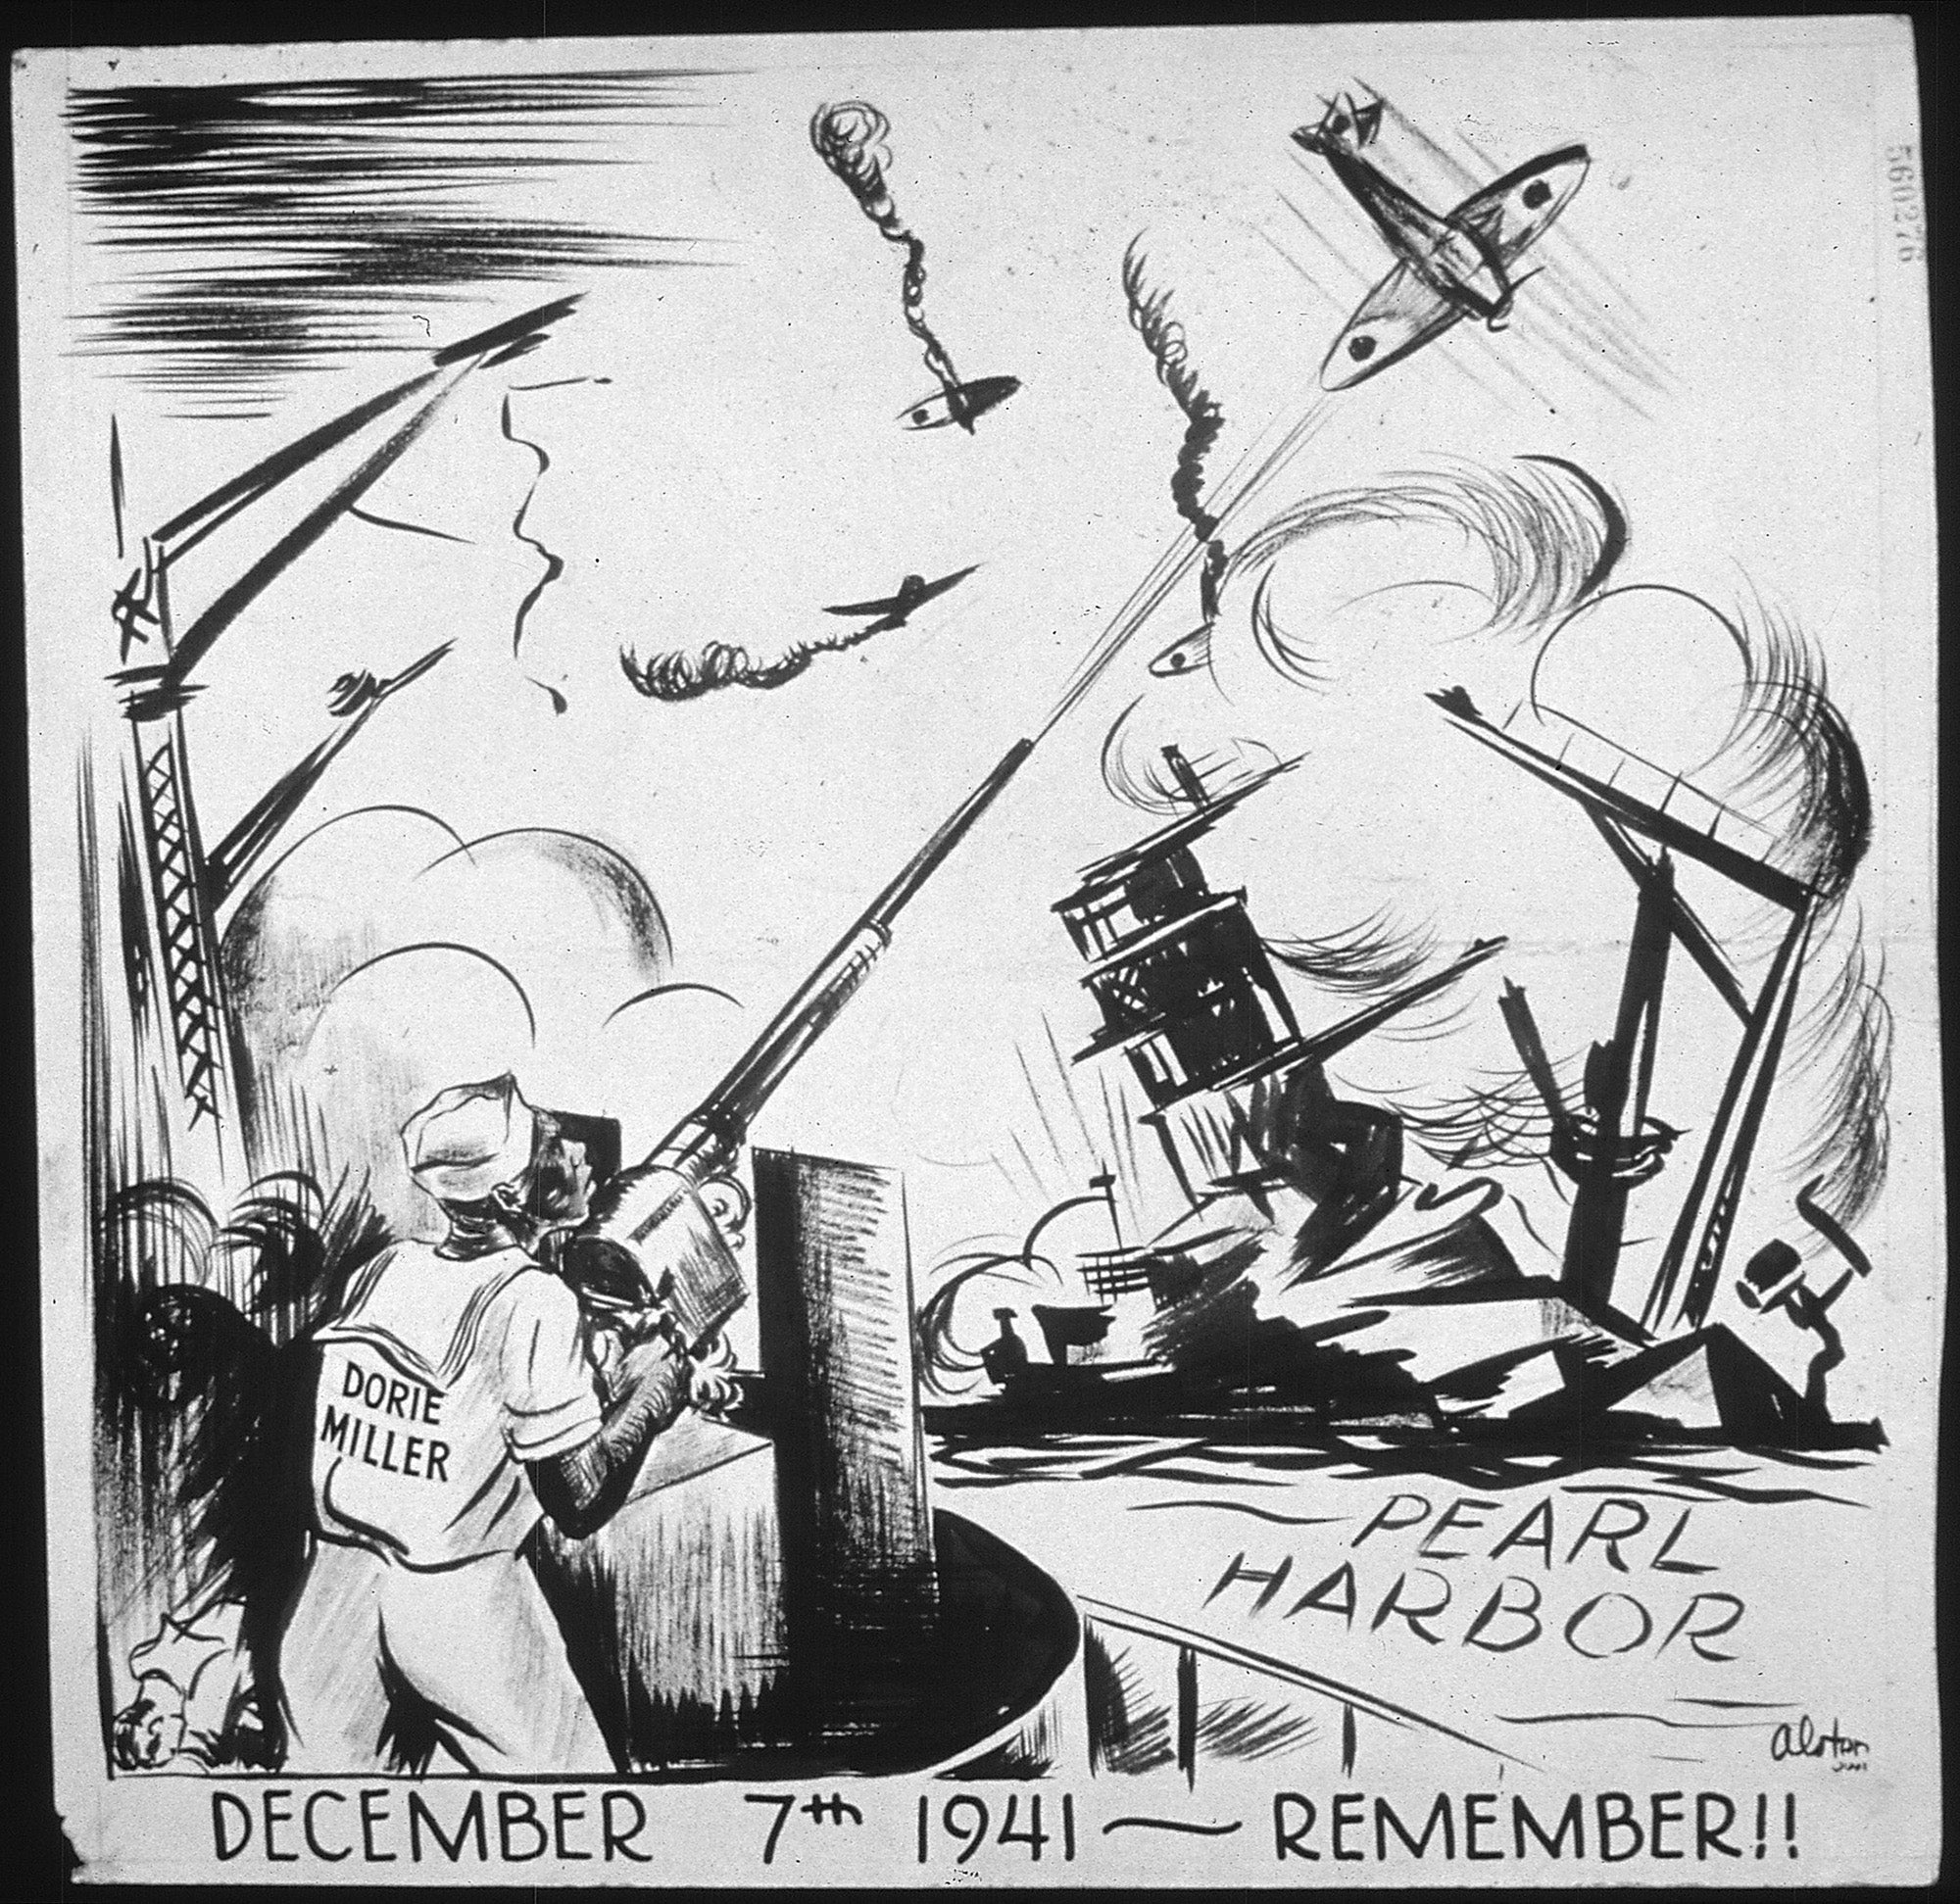 A cartoon depicting Doris Miller shooting down a plane